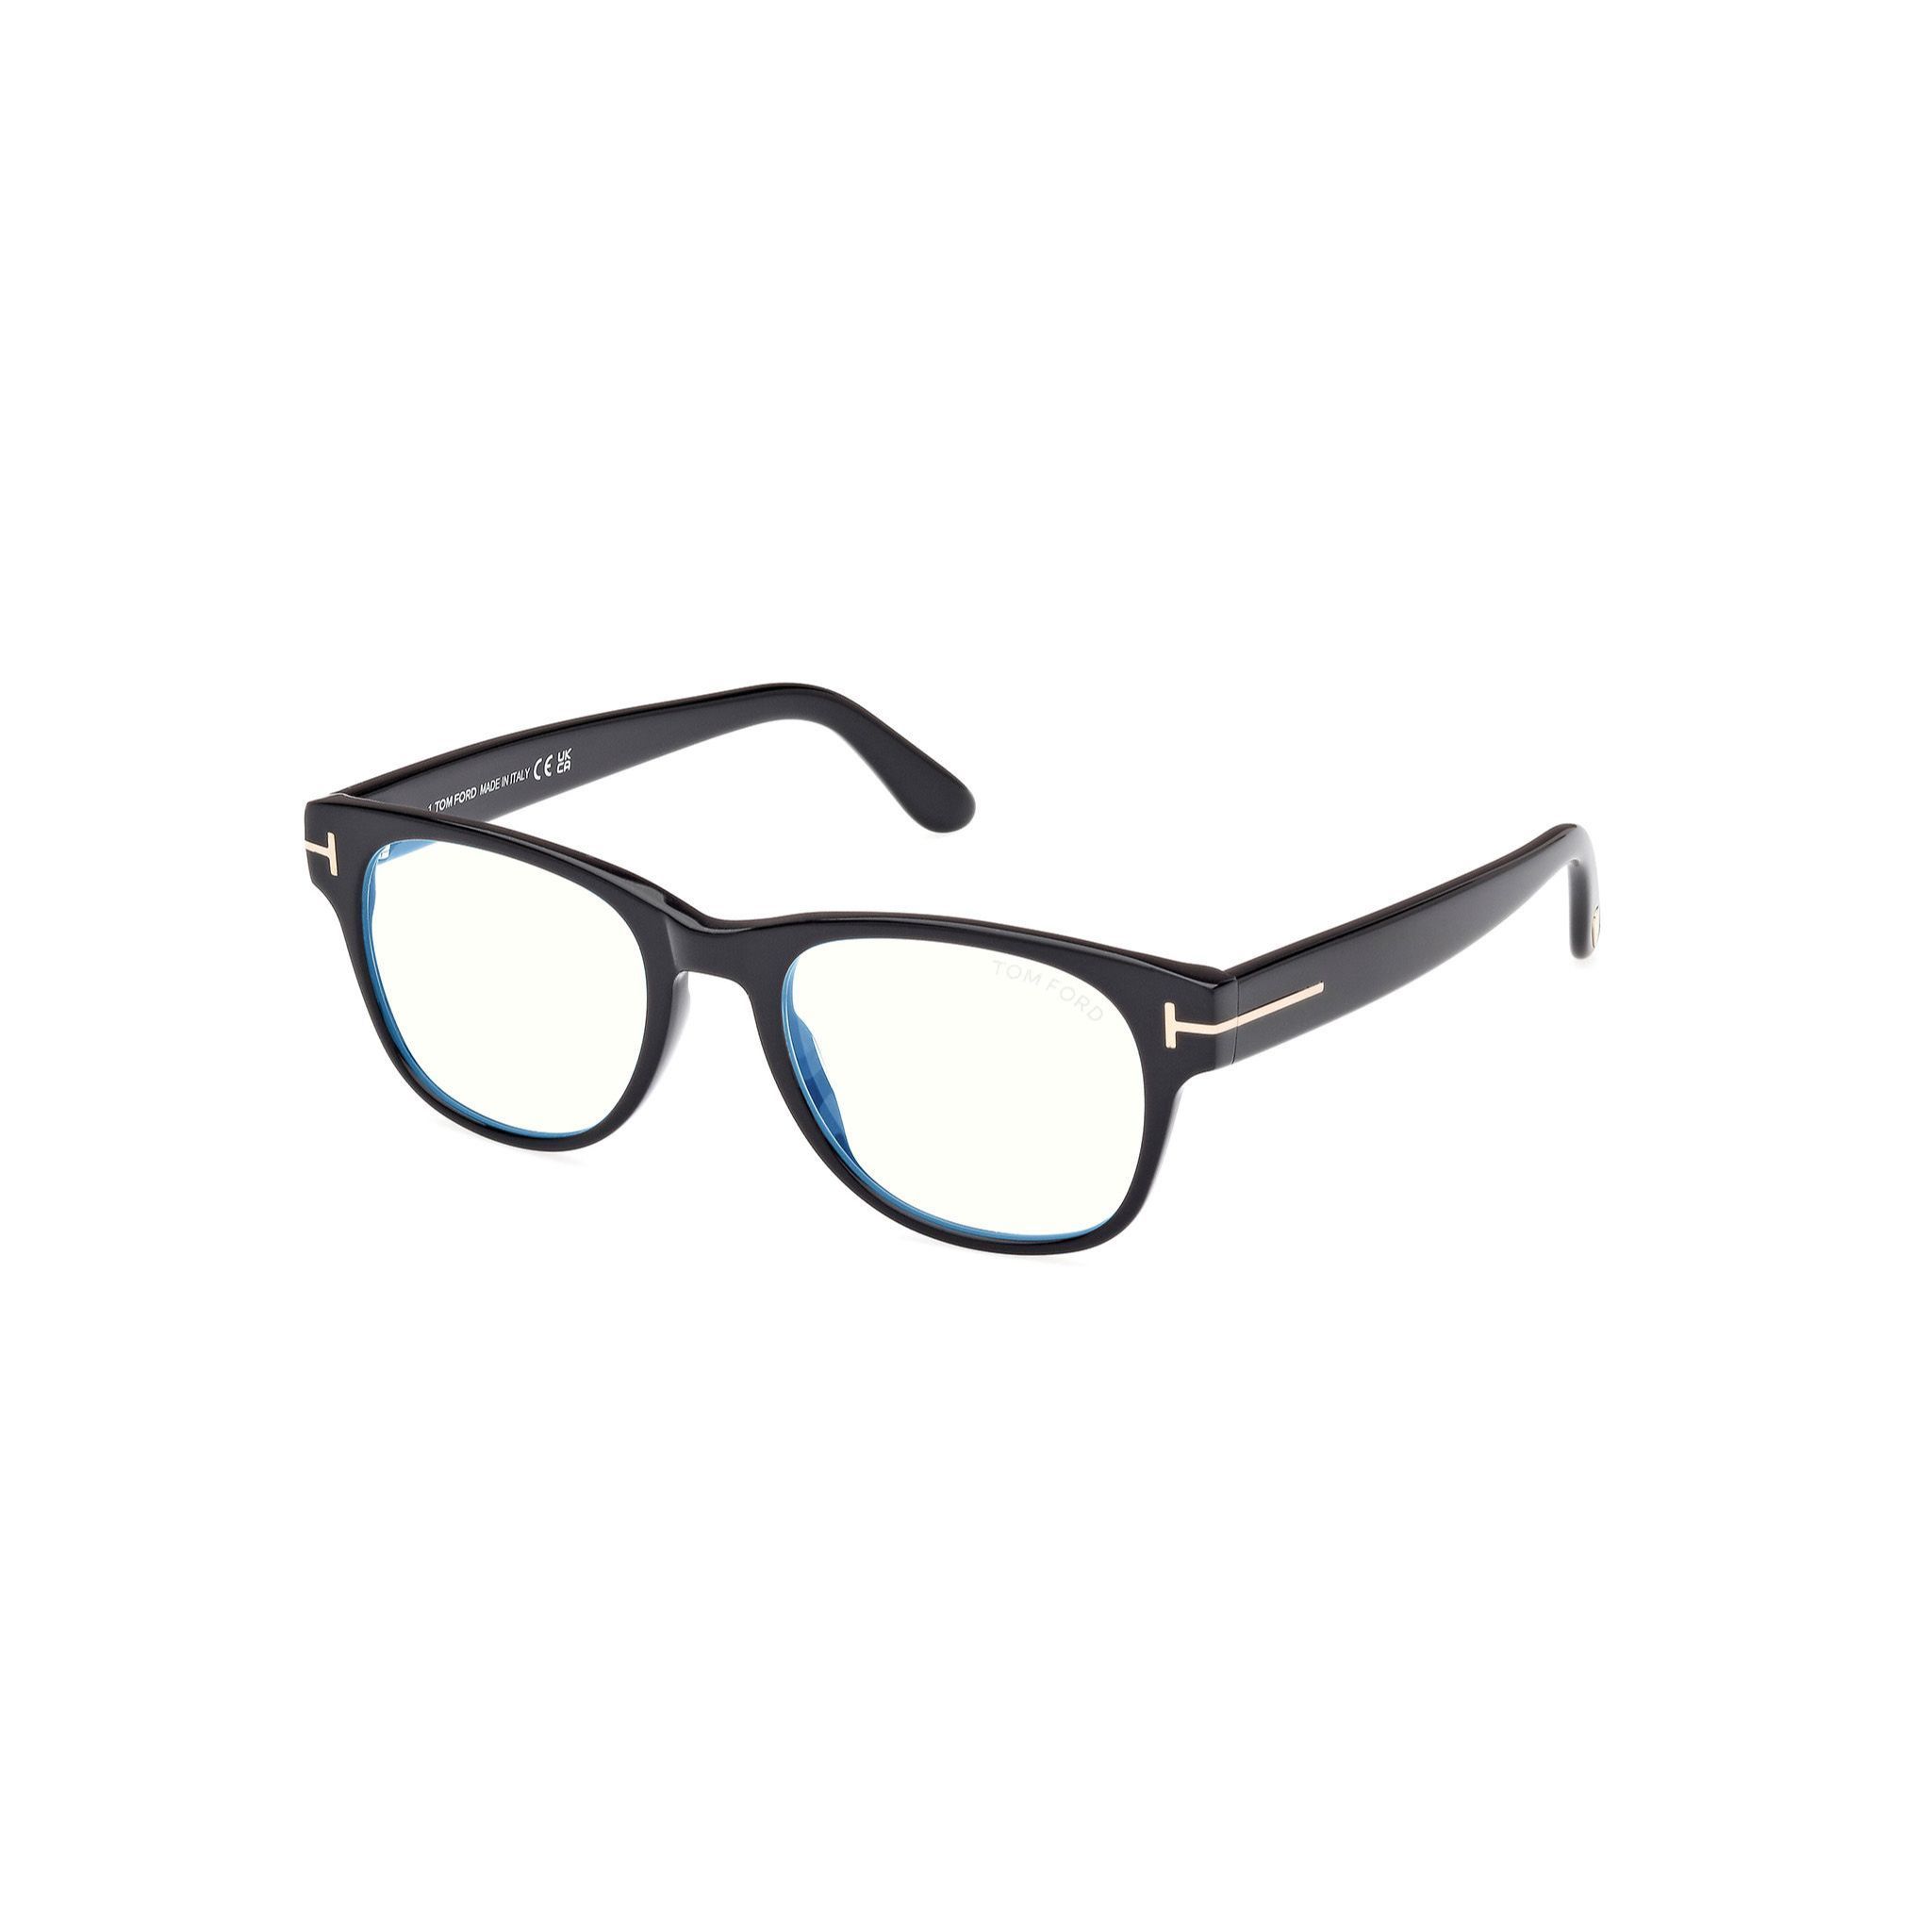 FT5898 Square Eyeglasses B001 - size  52